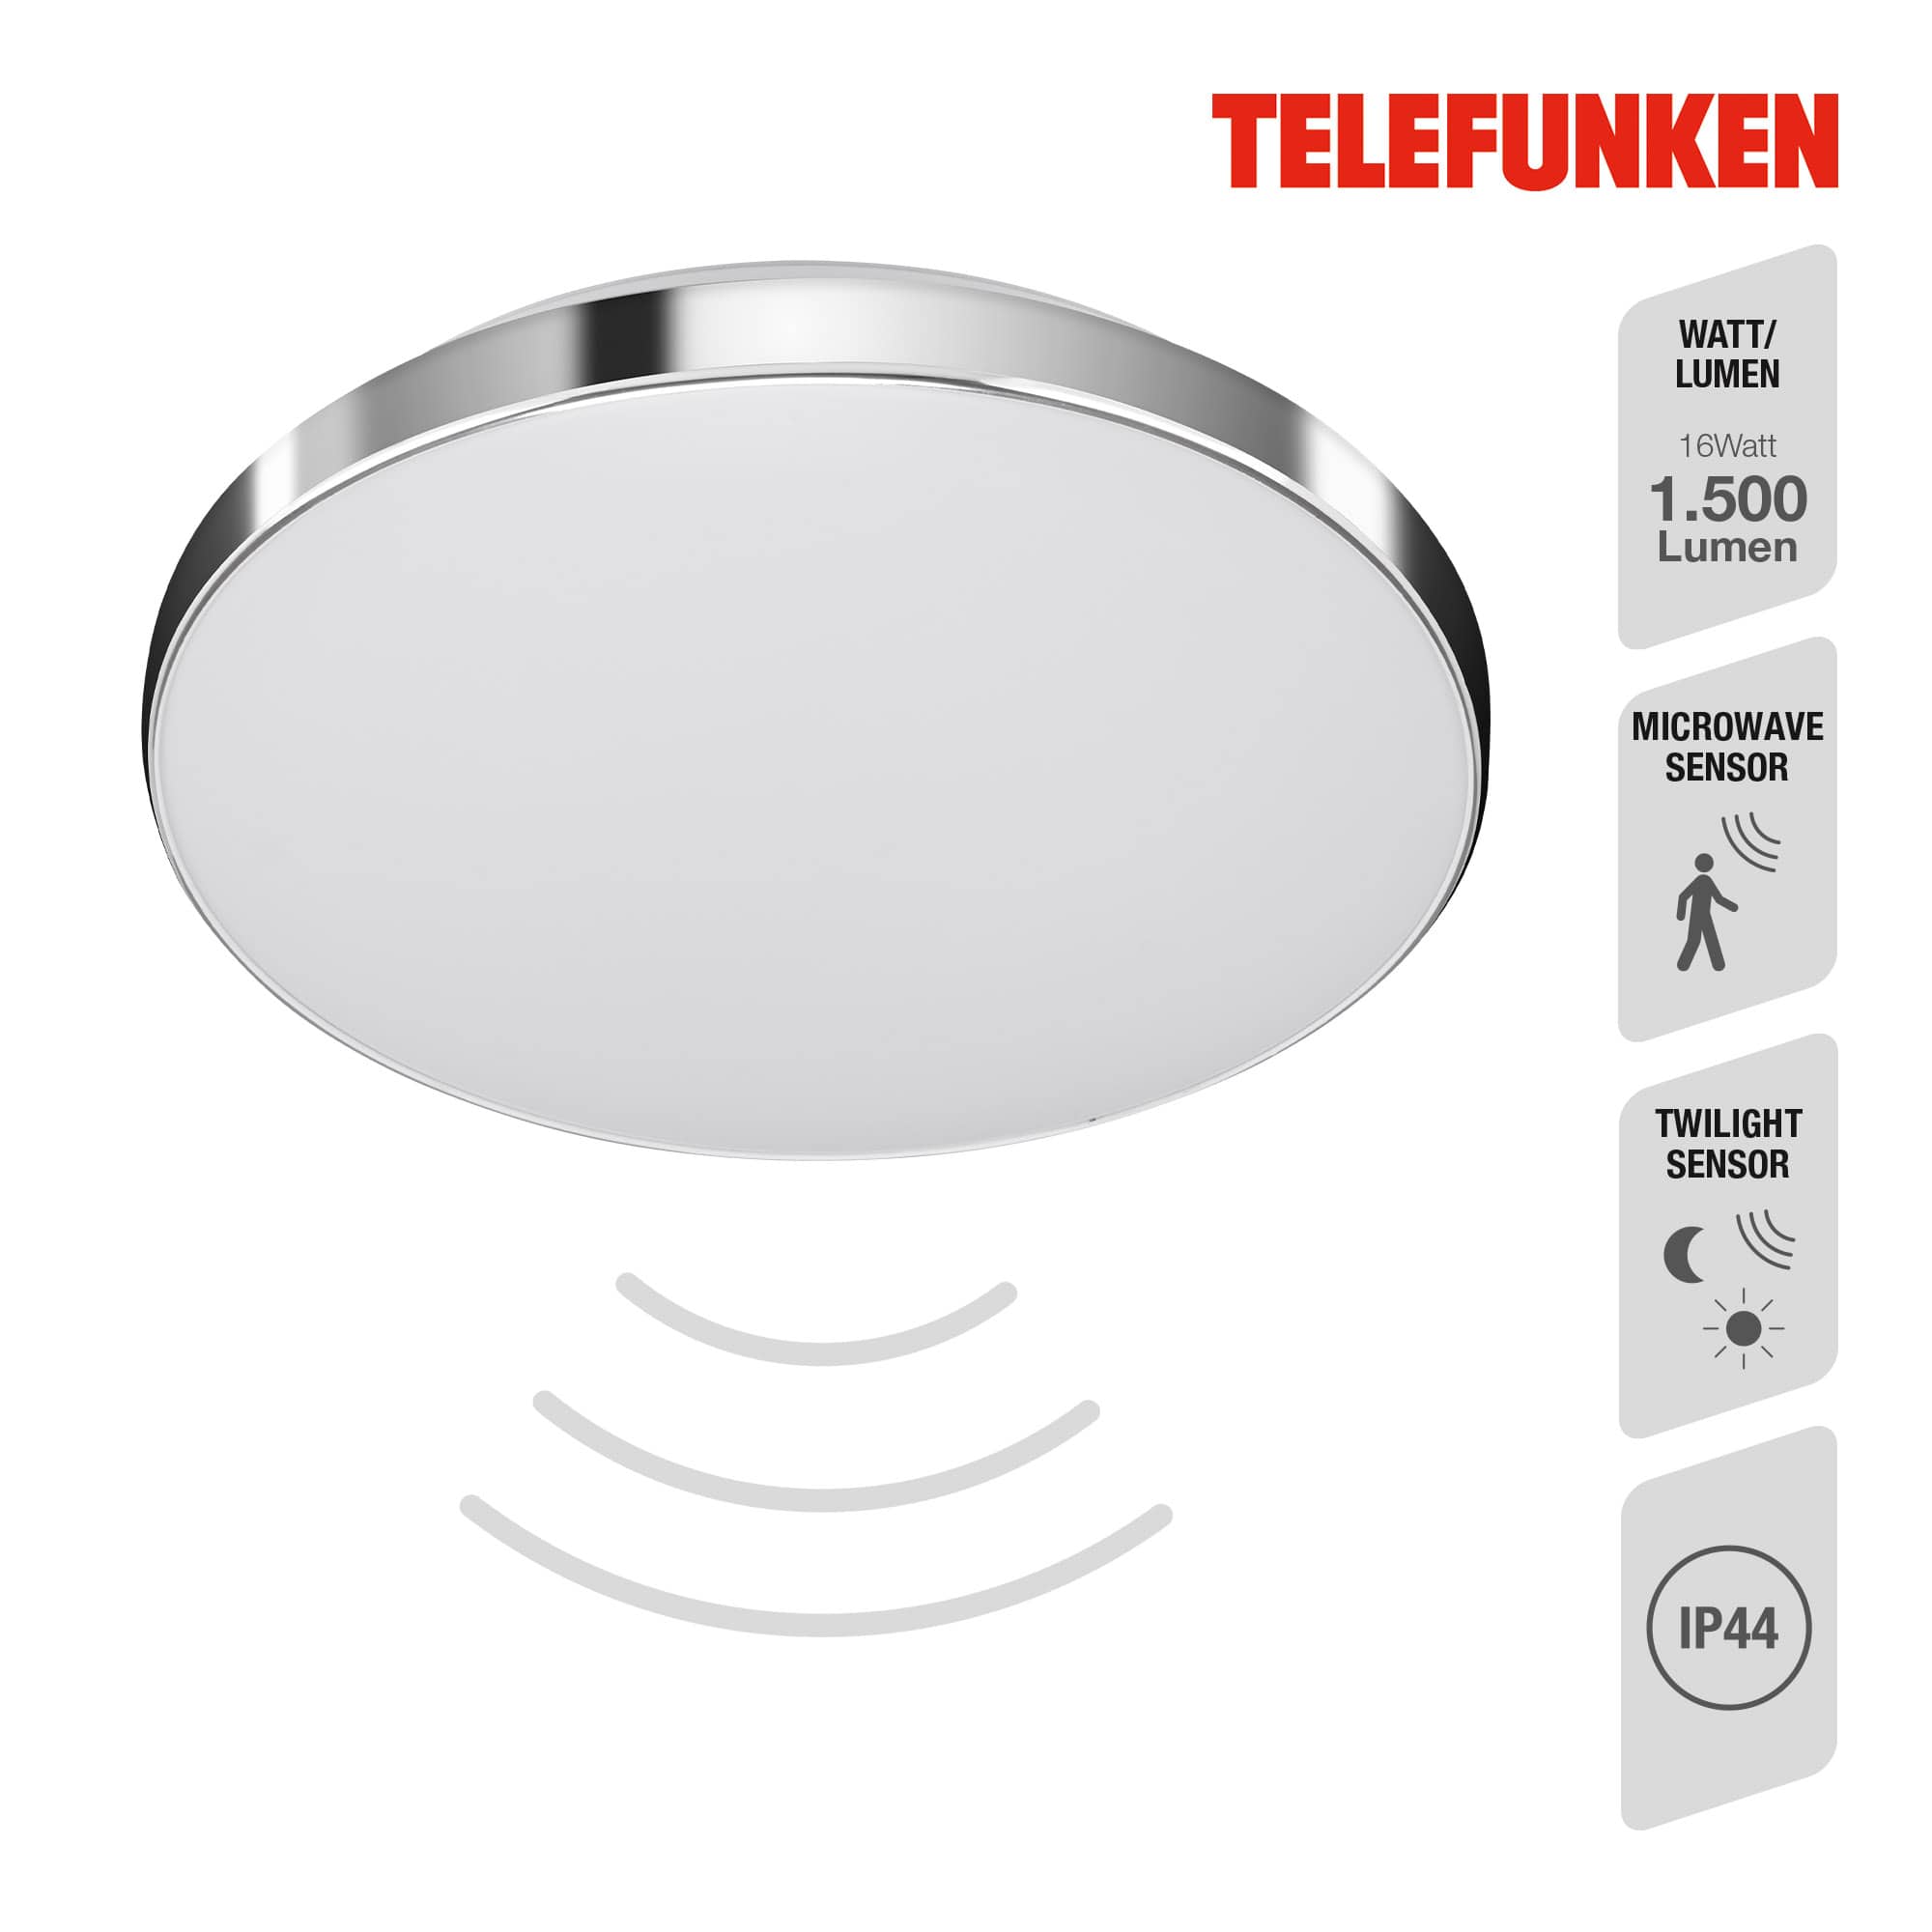 TELEFUNKEN Sensor LED Deckenleuchte, Ø 29 cm, 16 W, Weiß-Chrom